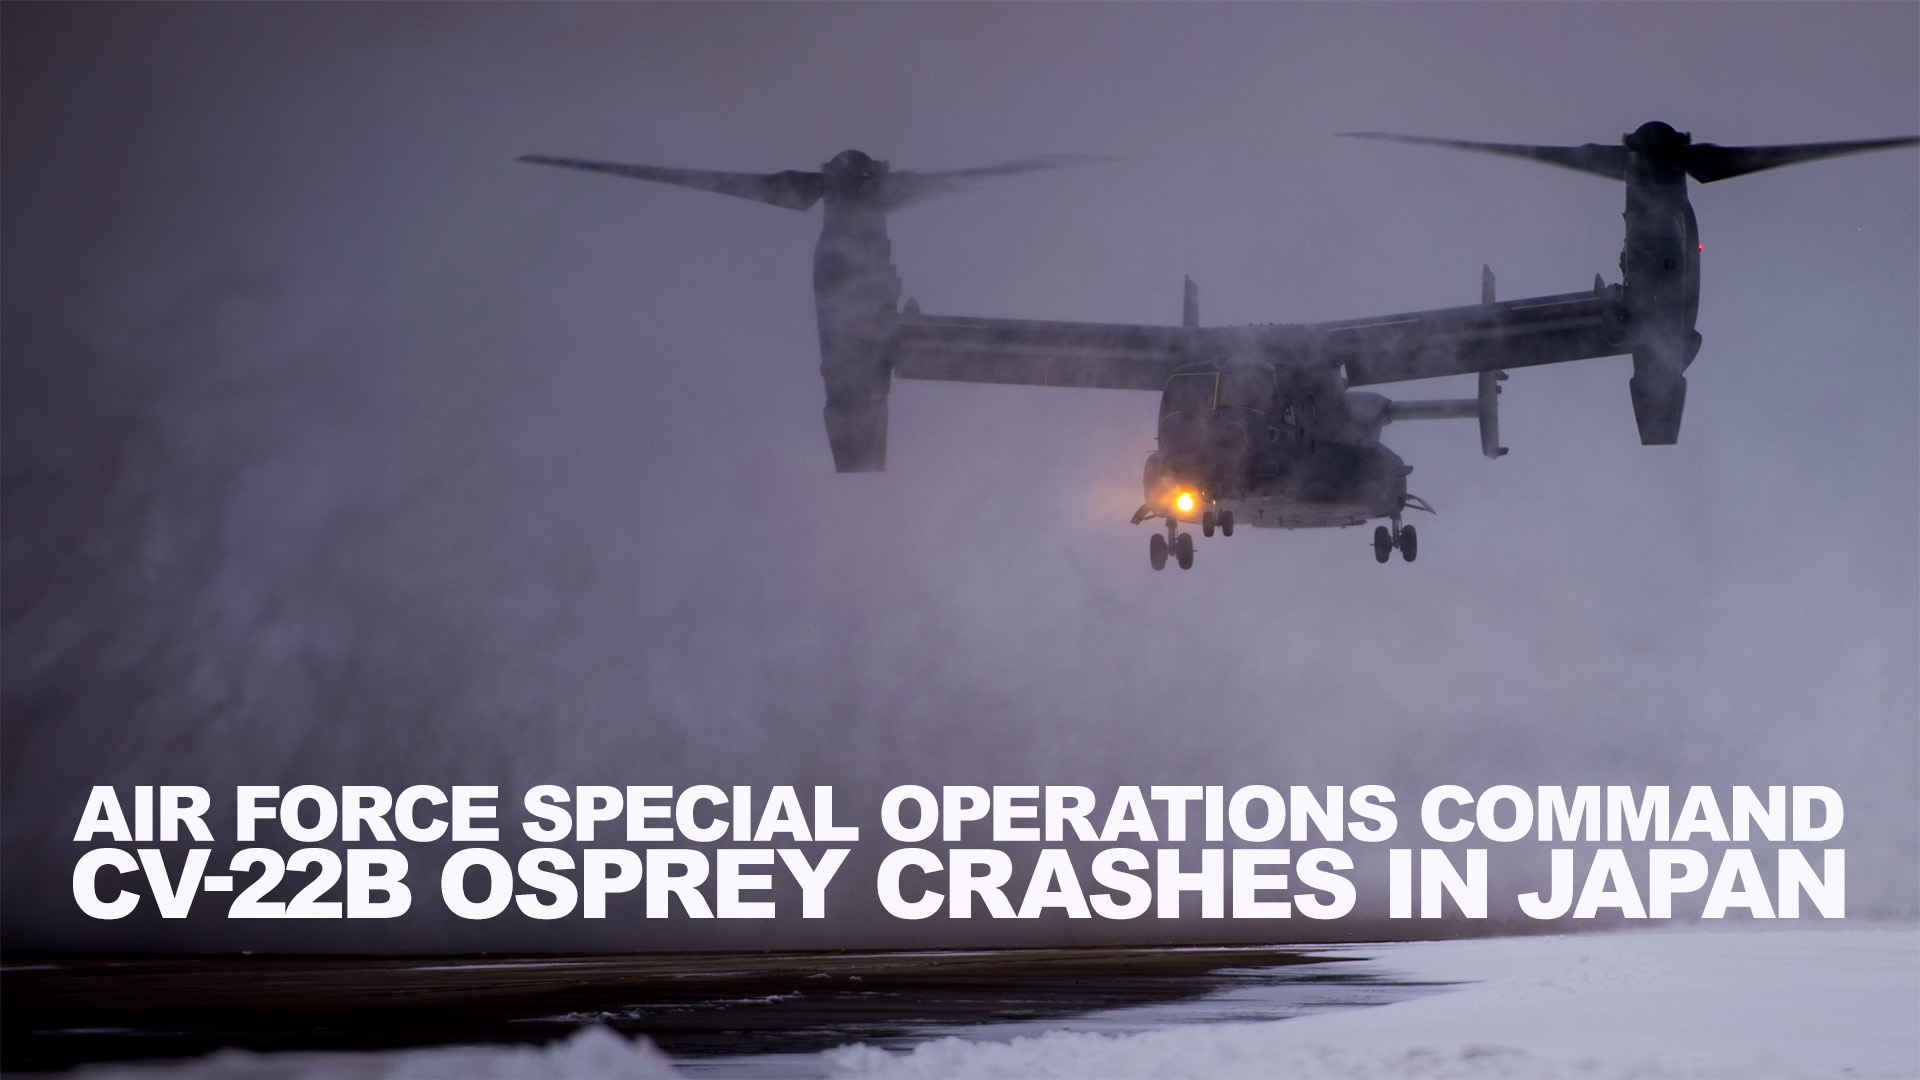 Special Operations CV-22B Osprey Crash in Japan